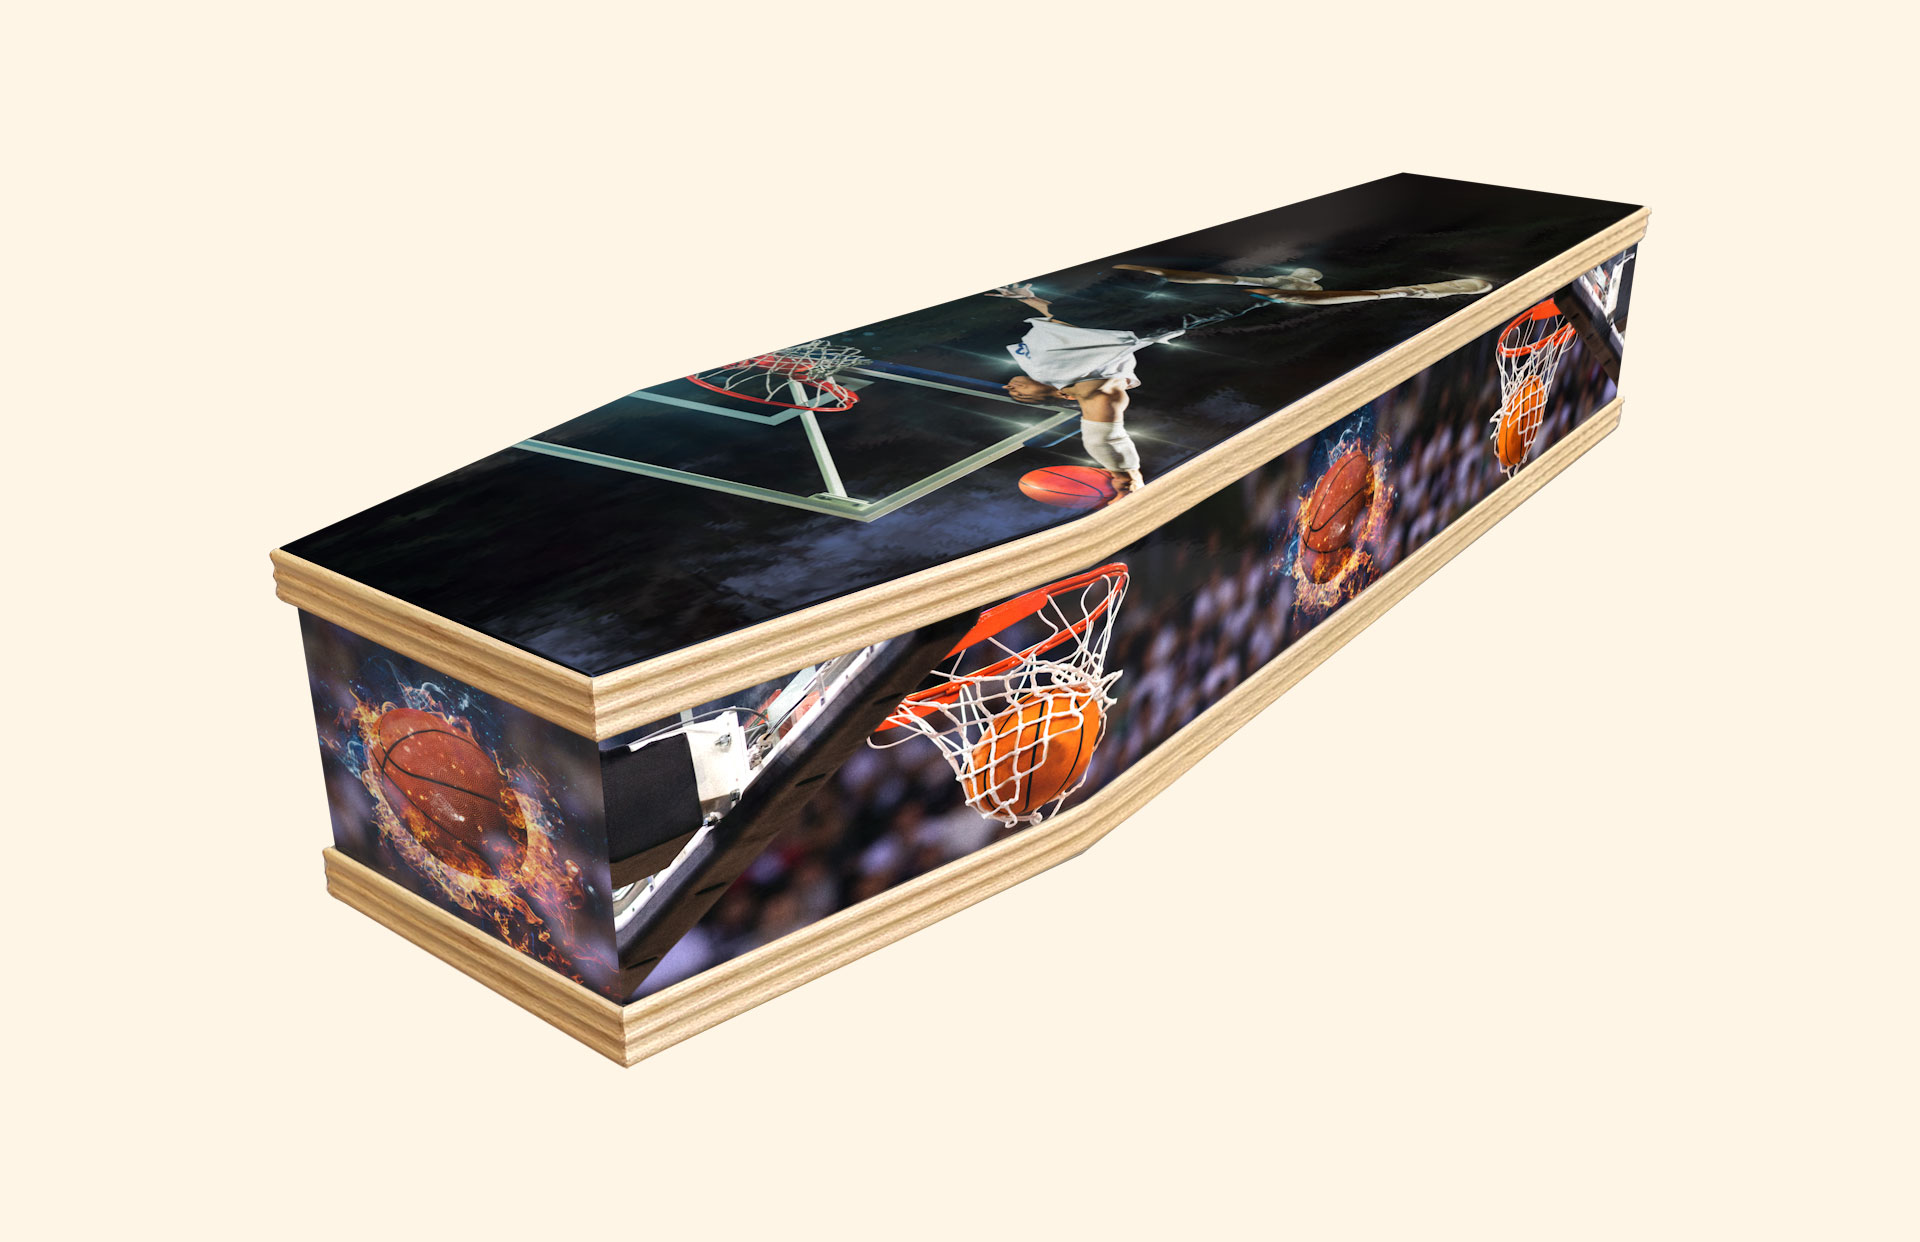 Slam Dunk design on a classic coffin